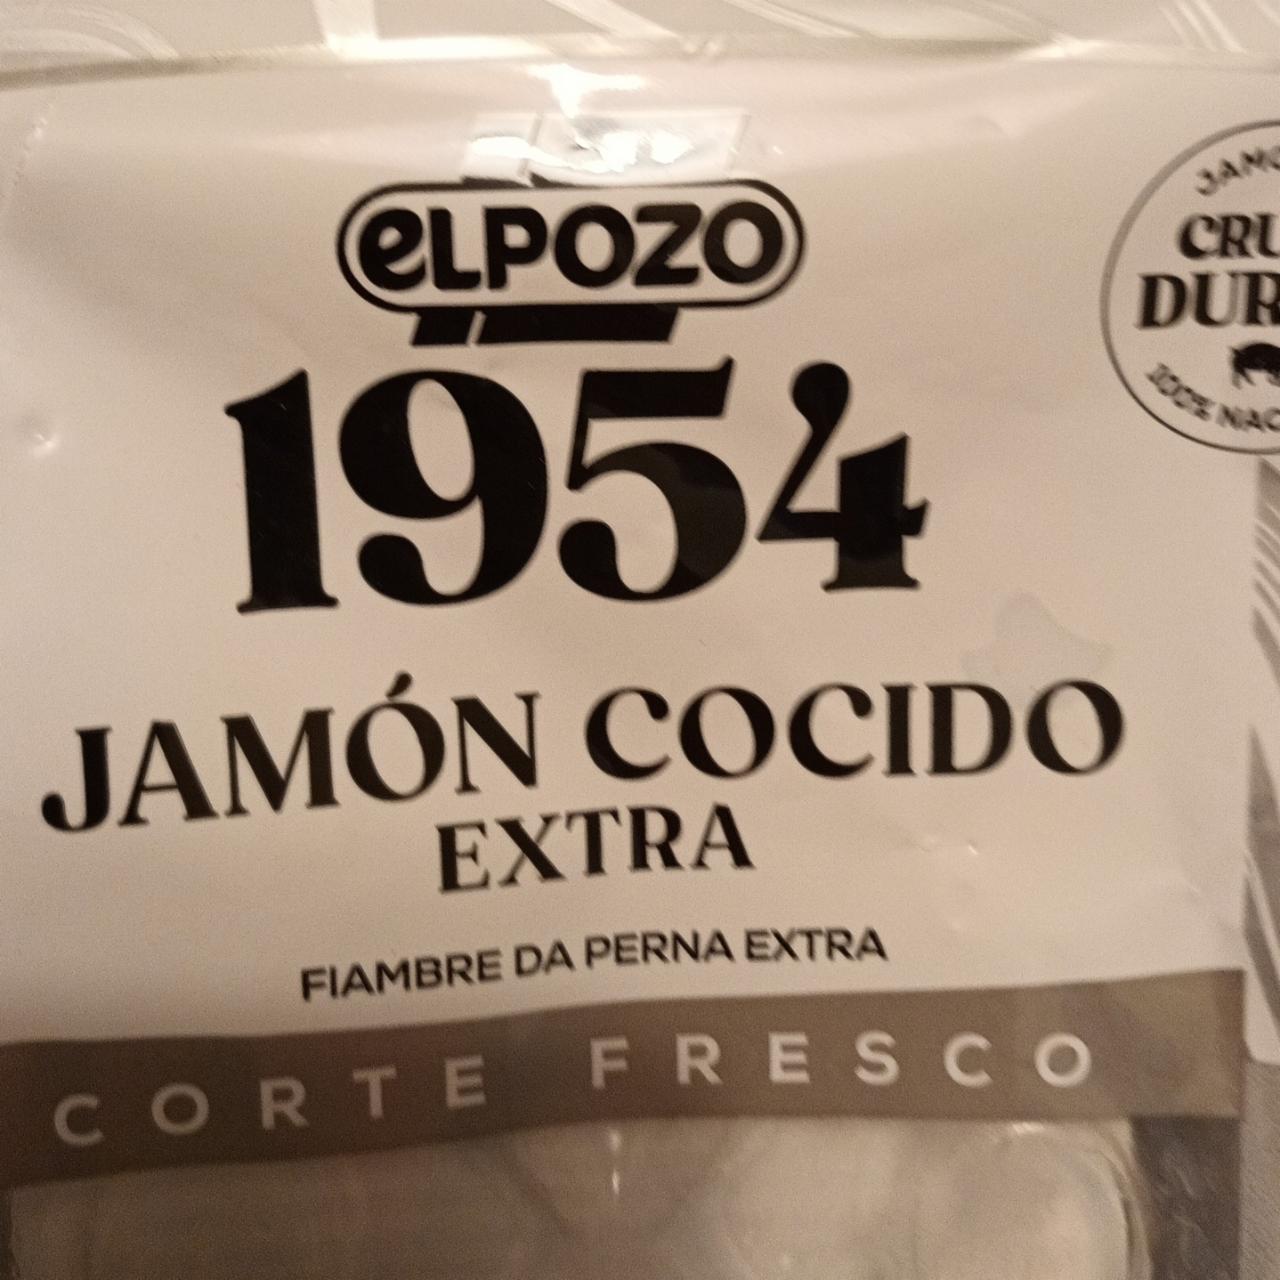 Fotografie - Jamón Cocido Extra 1954 Elpozo